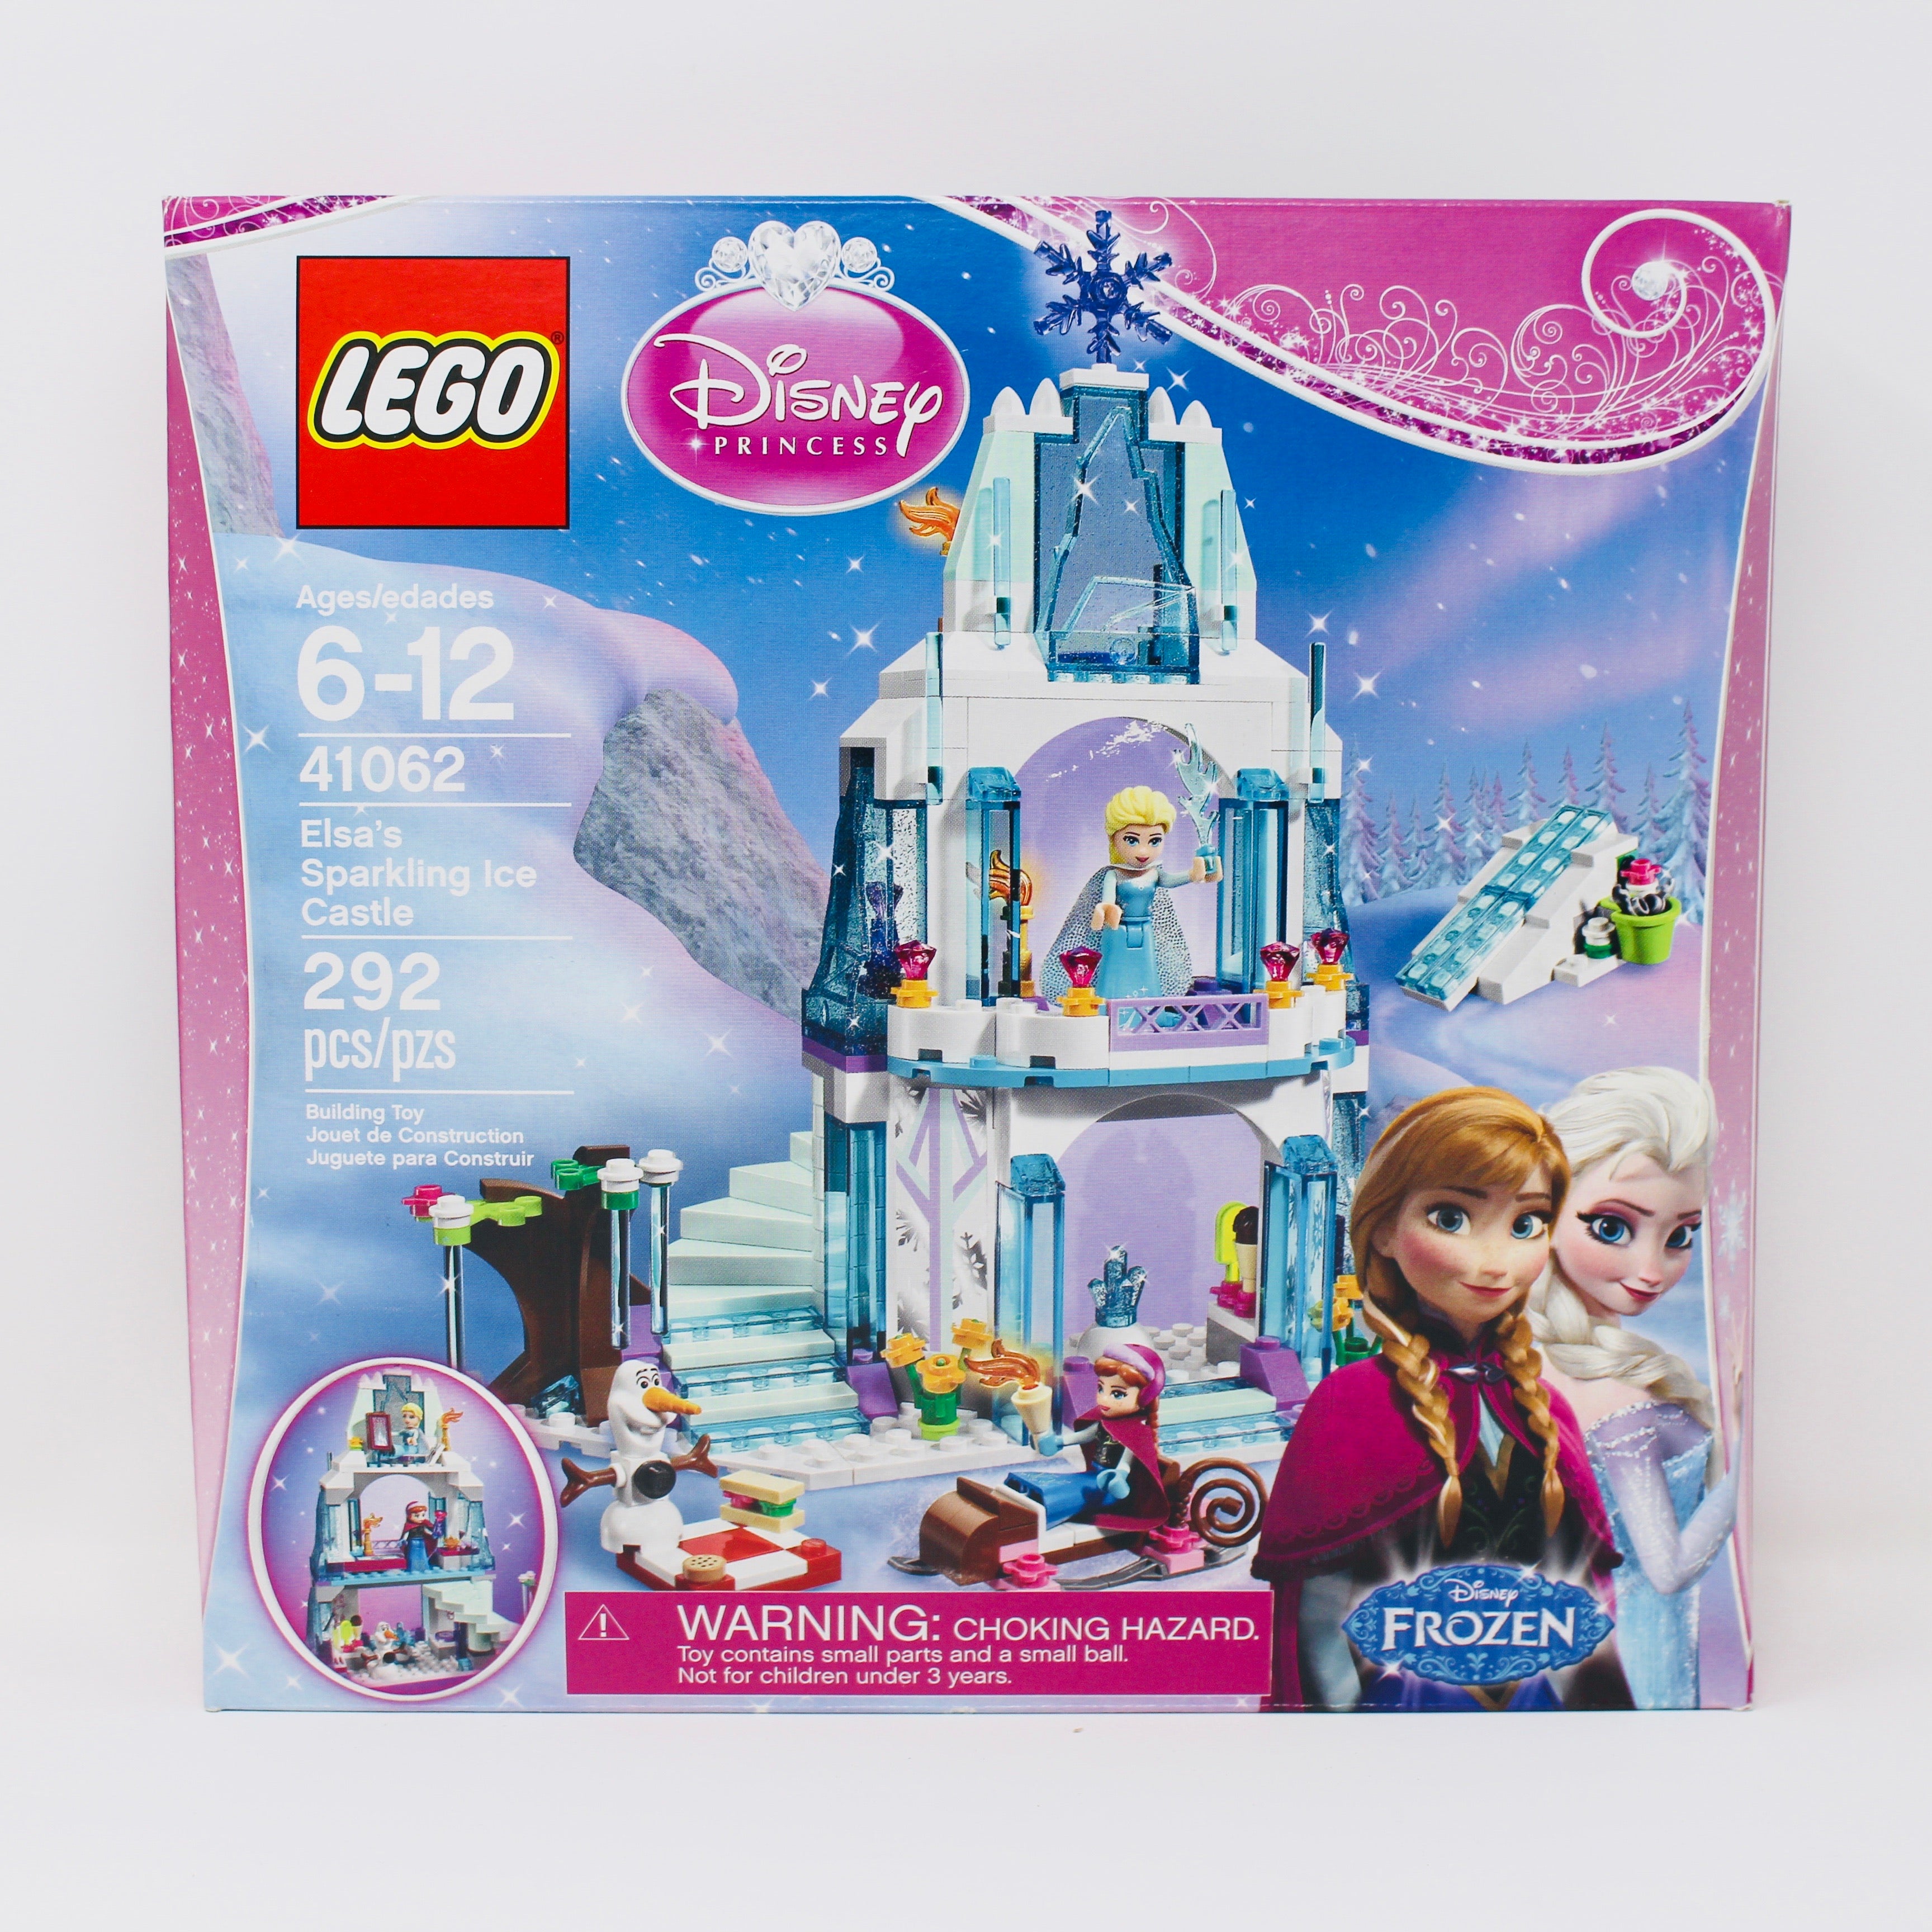 Retired Set 41062 Frozen Elsas Sparkling Ice Castle